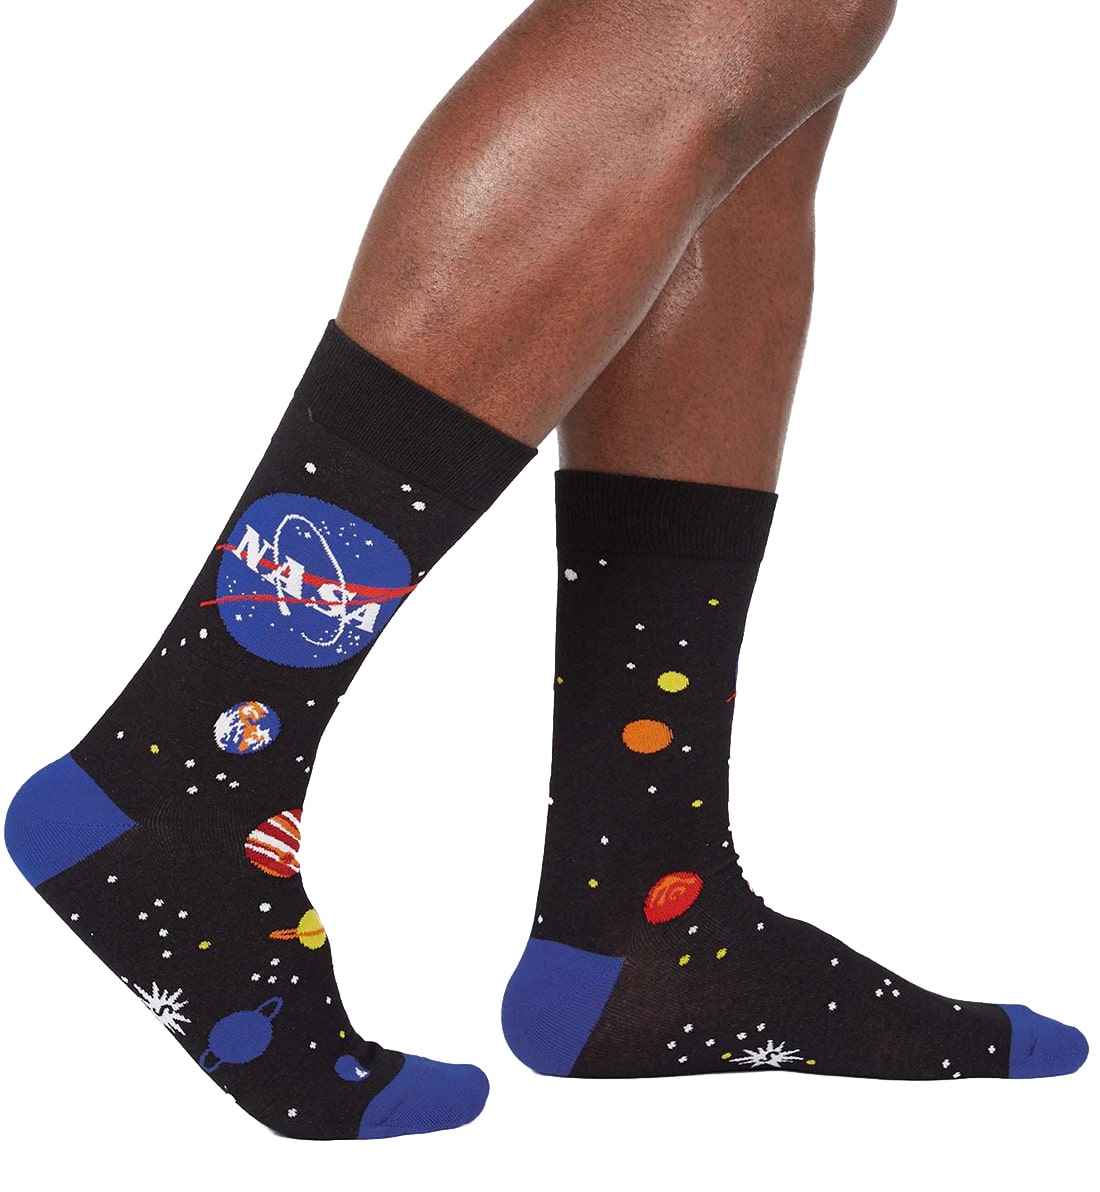 SOCK it to me Men's Crew Socks (mef0443),NASA Solar System - NASA Solar System,One Size